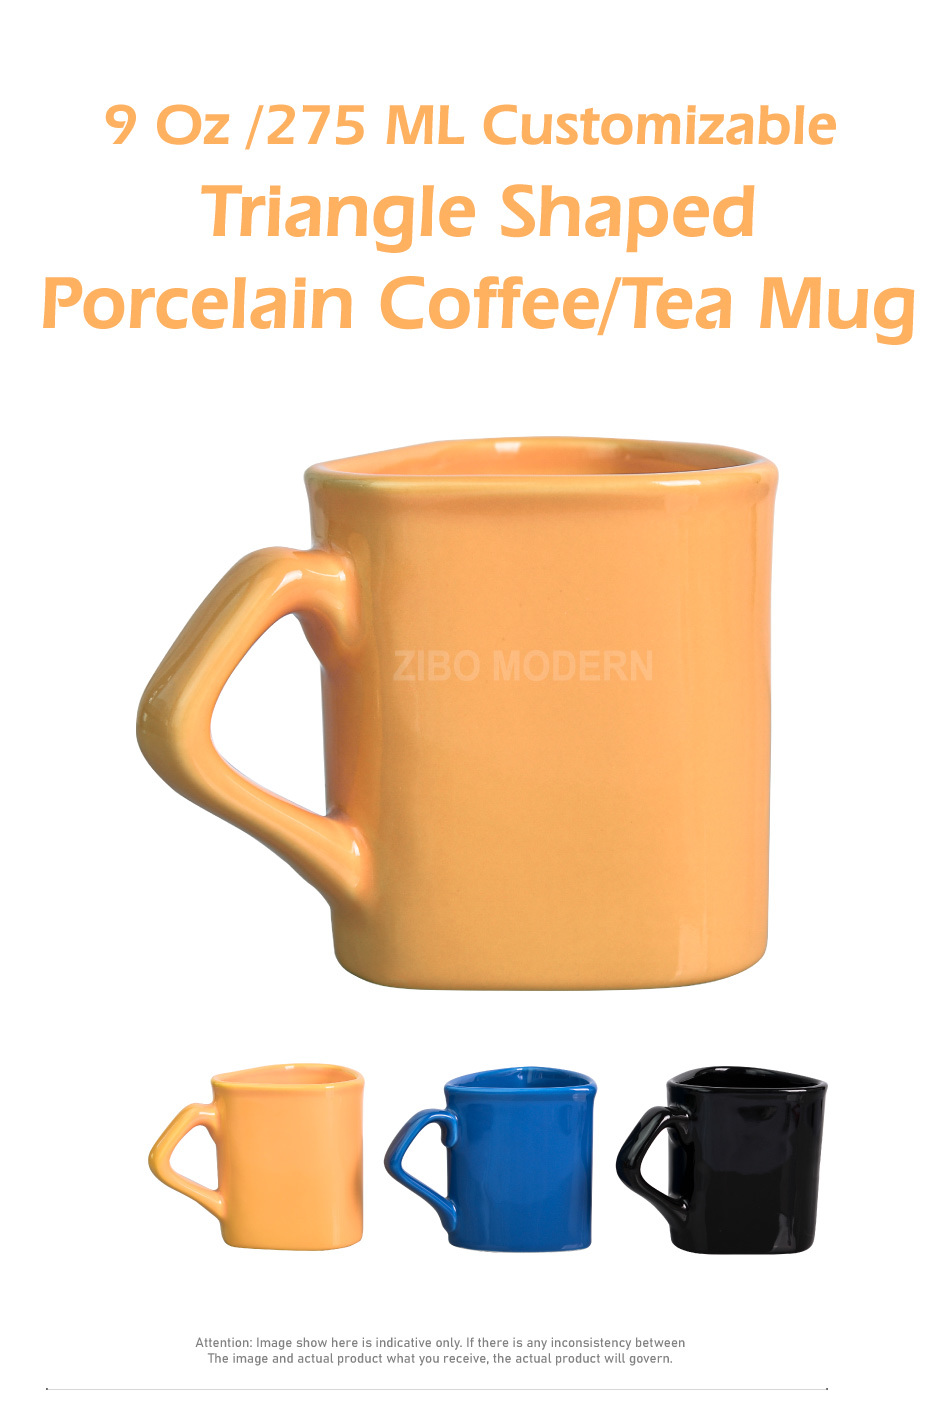 9 Oz /275 Ml Customizable Triangle Shaped Porcelain Coffee/Tea Mug - Porcelain Coffee/Tea Mug, Stoneware